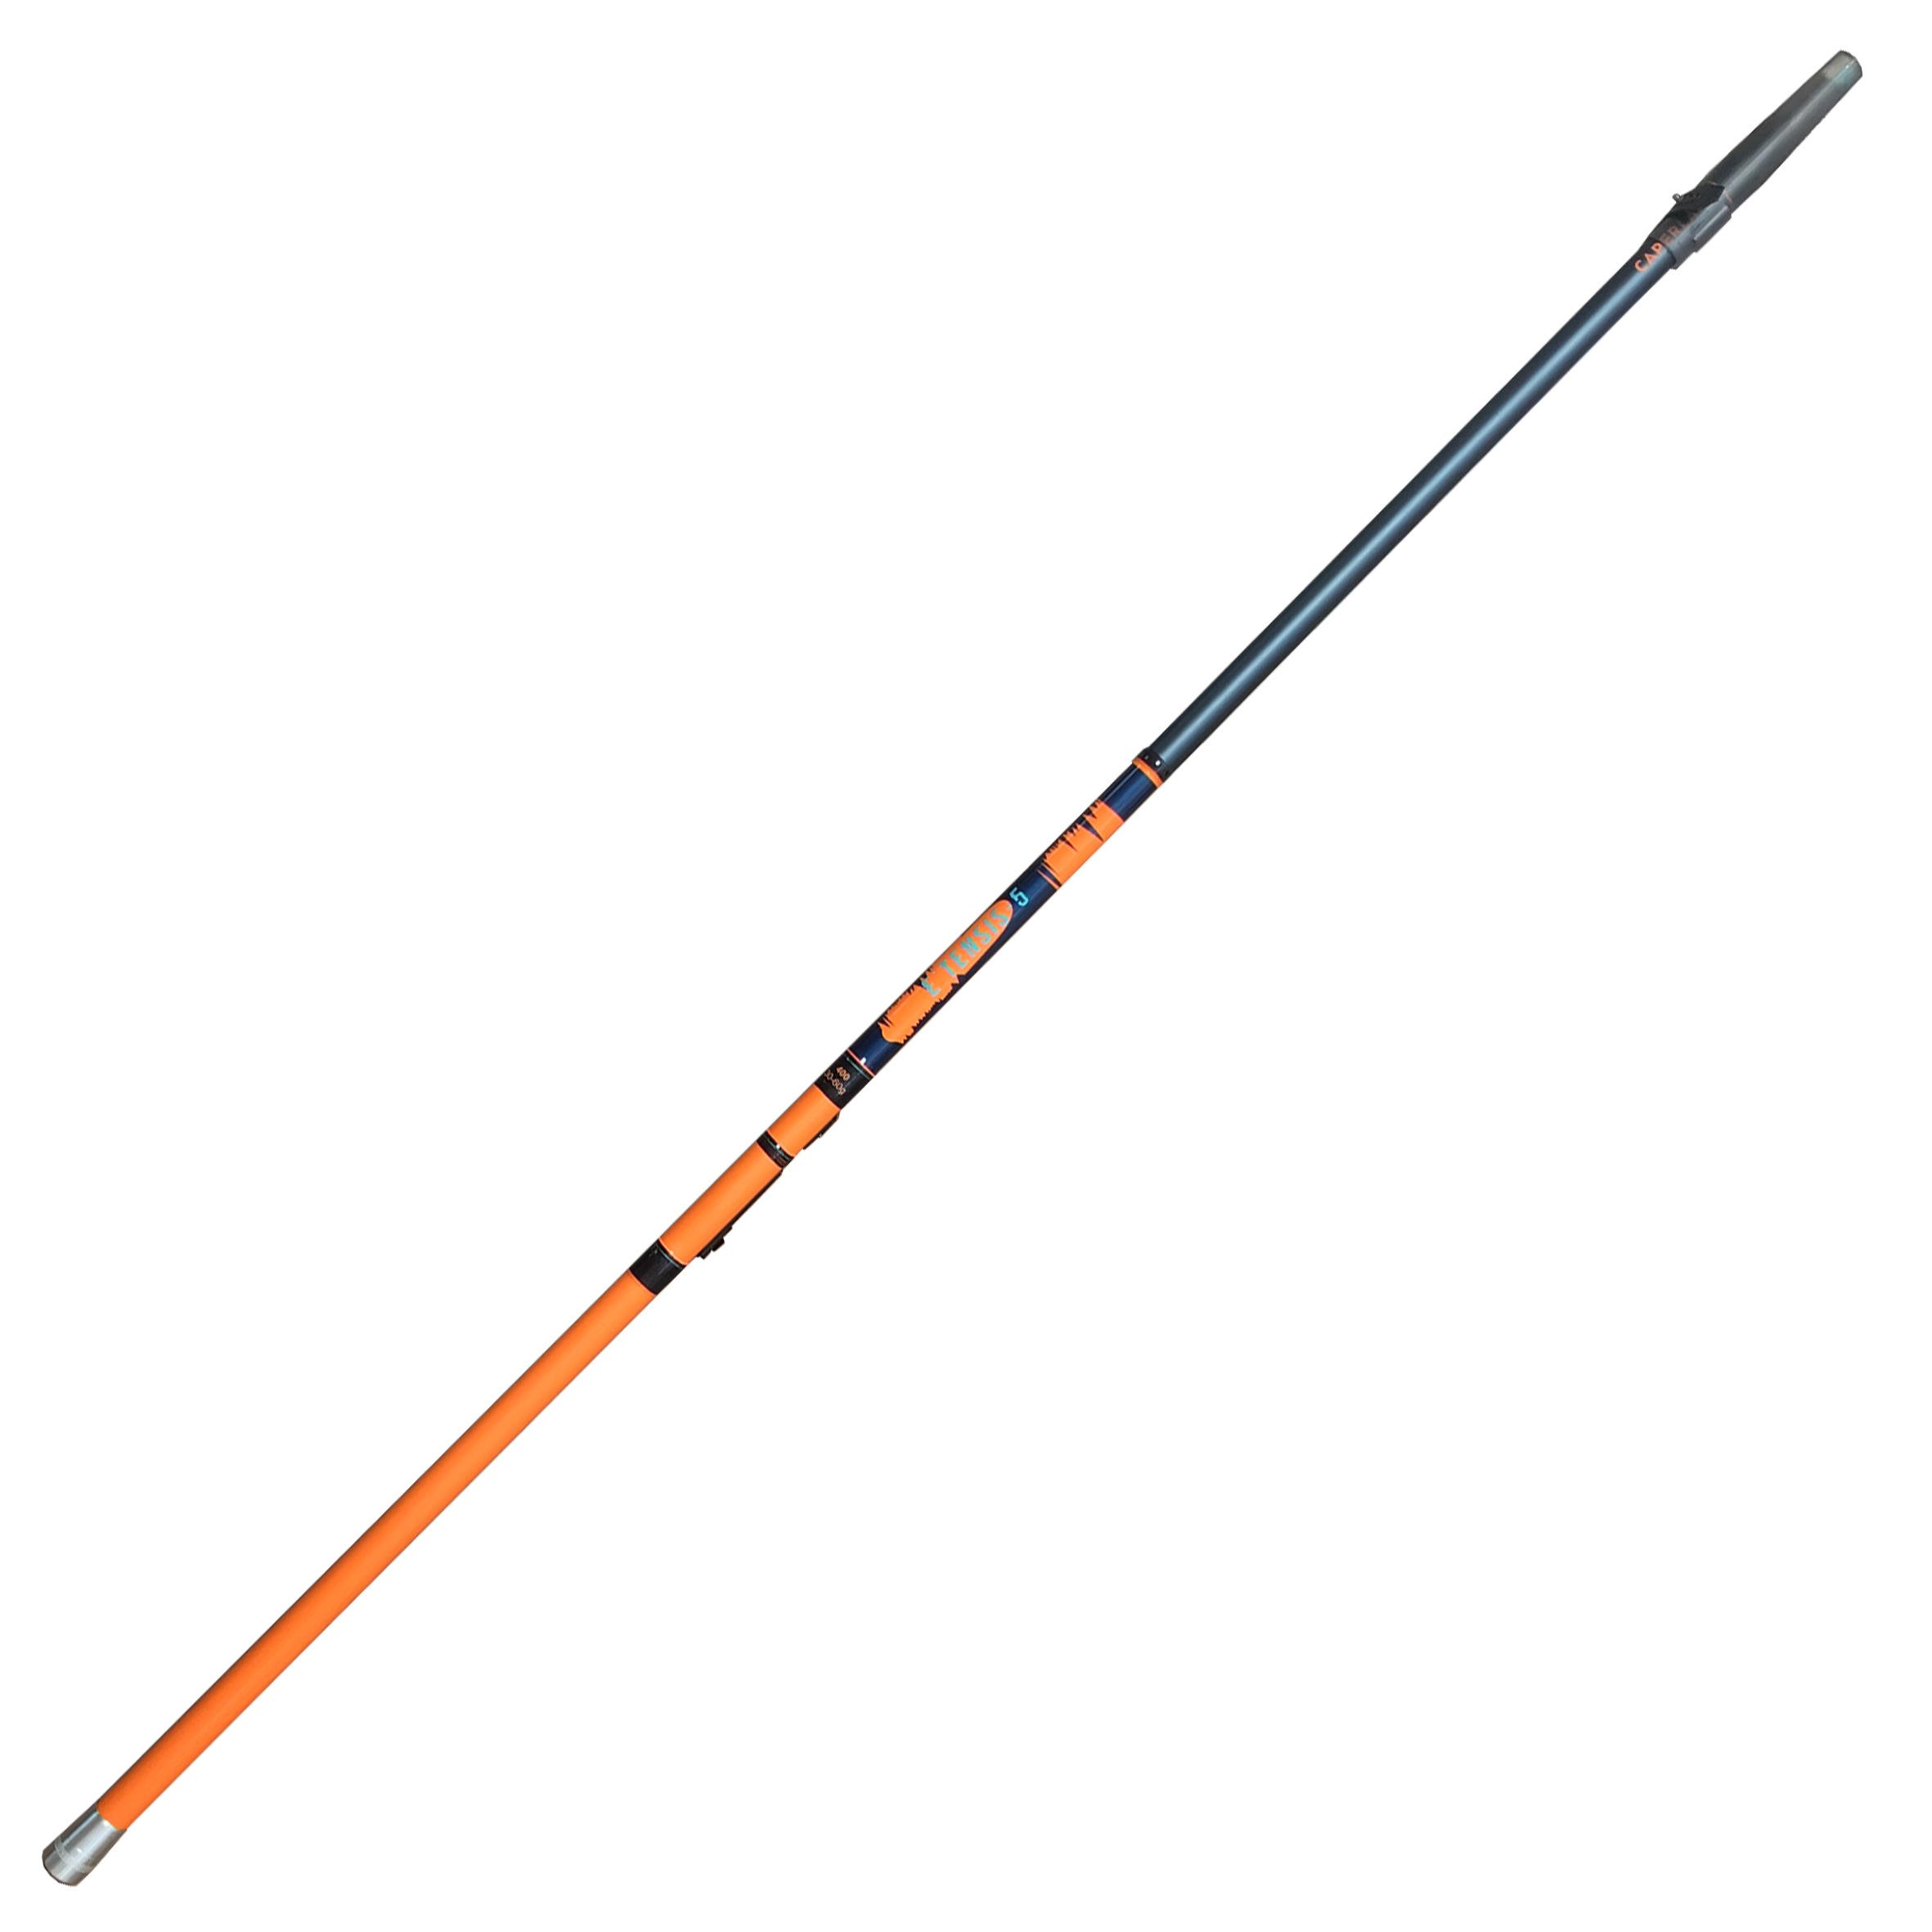 E'TENSIS-5 400 sea fishing rod 2/8